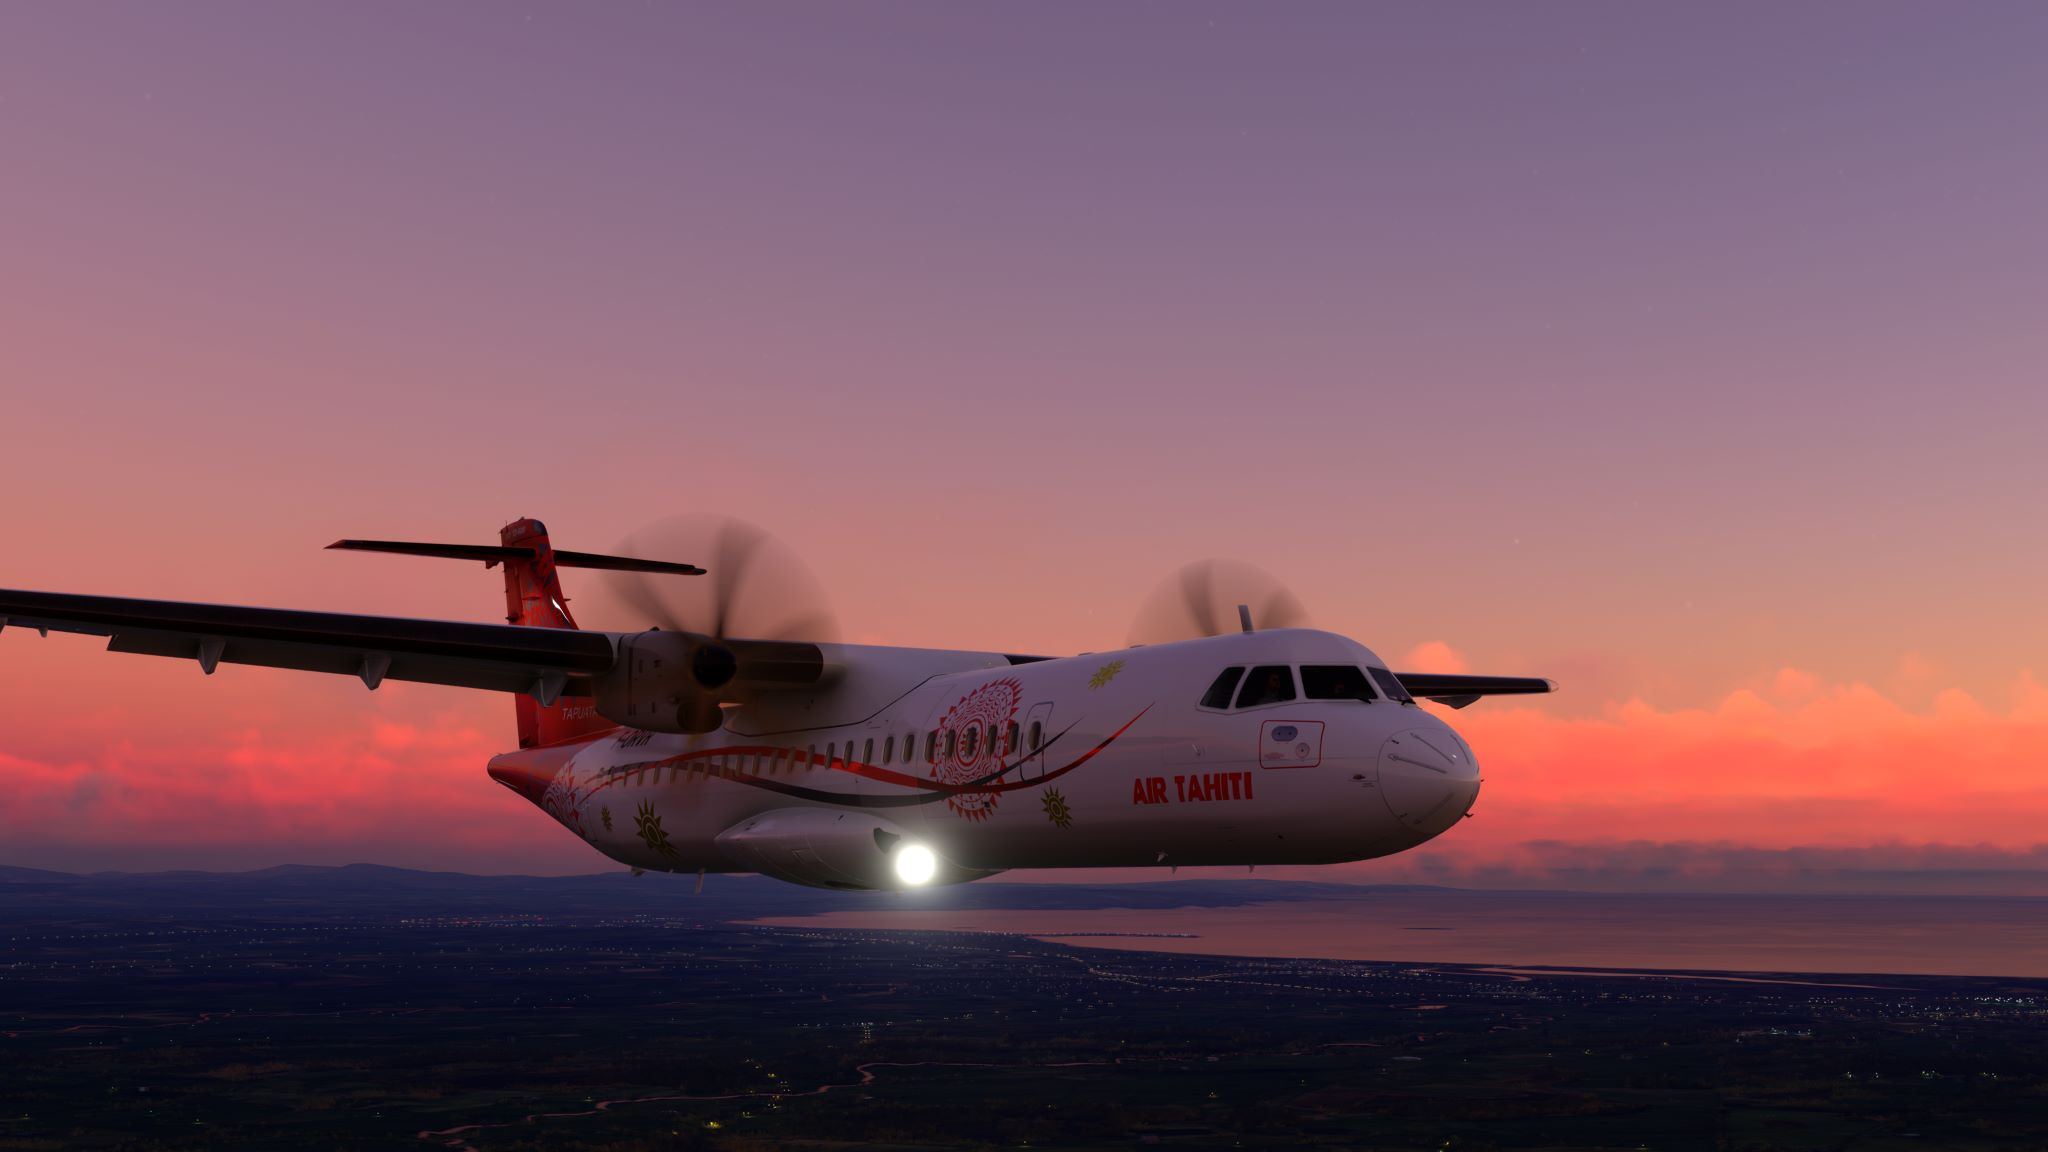 Air Tahiti 'Poerani' F-ORVB, Expert Series (Asobo) ATR 42-600 [4K] para  Microsoft Flight Simulator